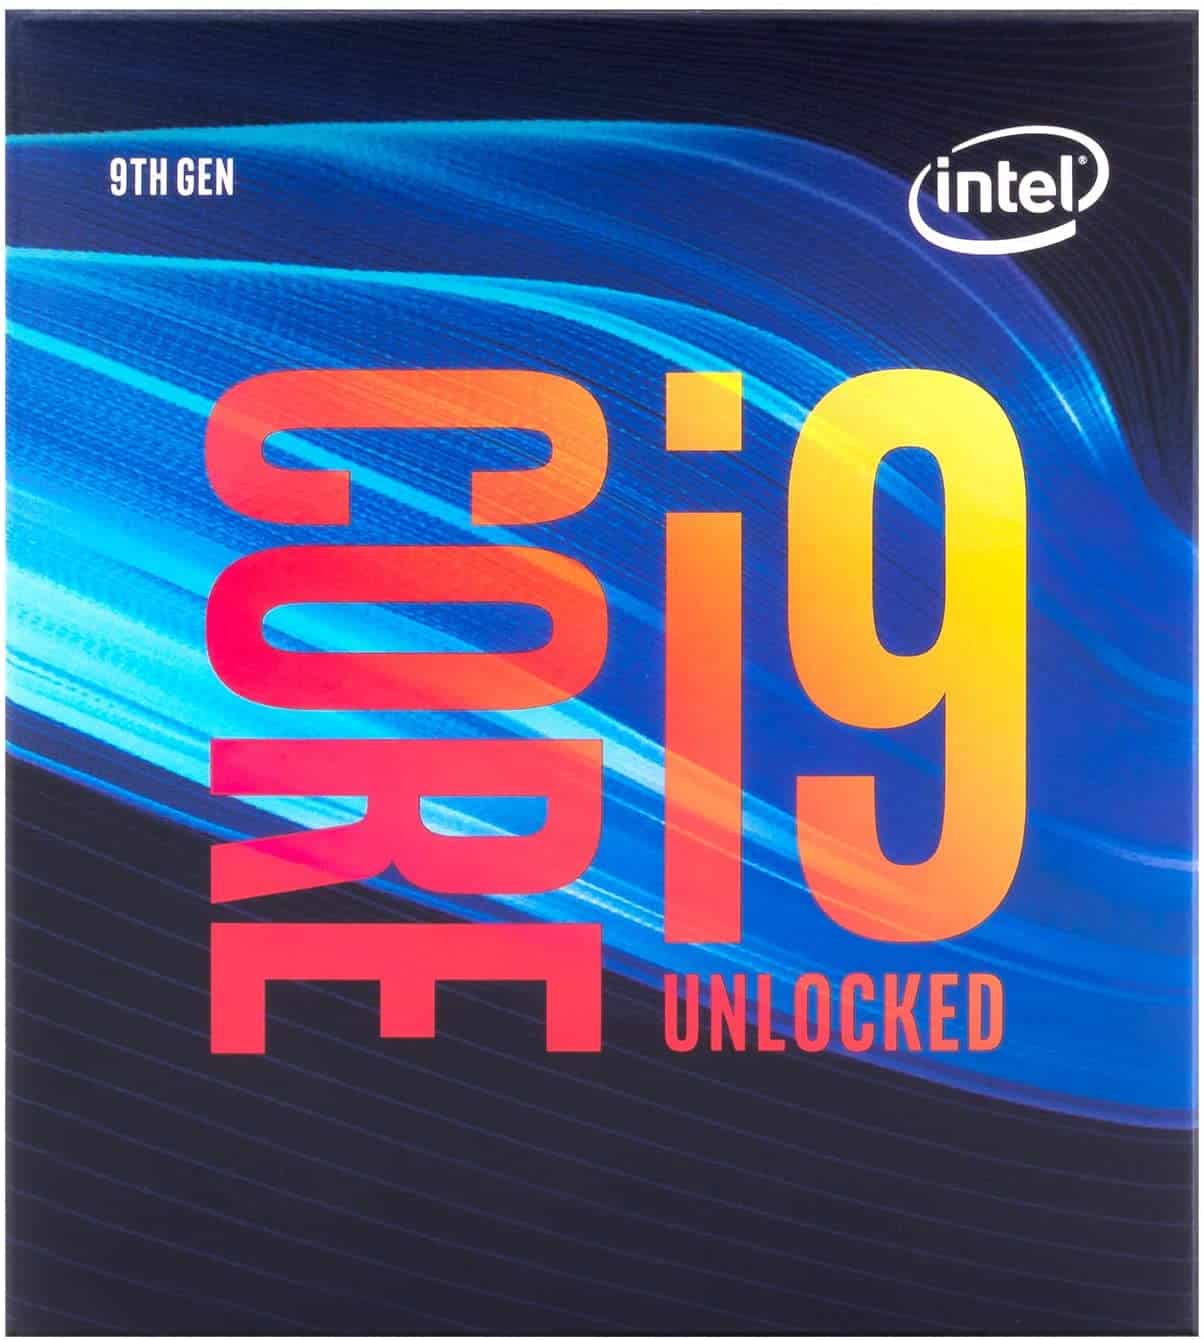 Intel Core i9-9900K Desktop Processor 8 Cores up to 5.0GHz Unlocked LGA1151 300 Series 95W